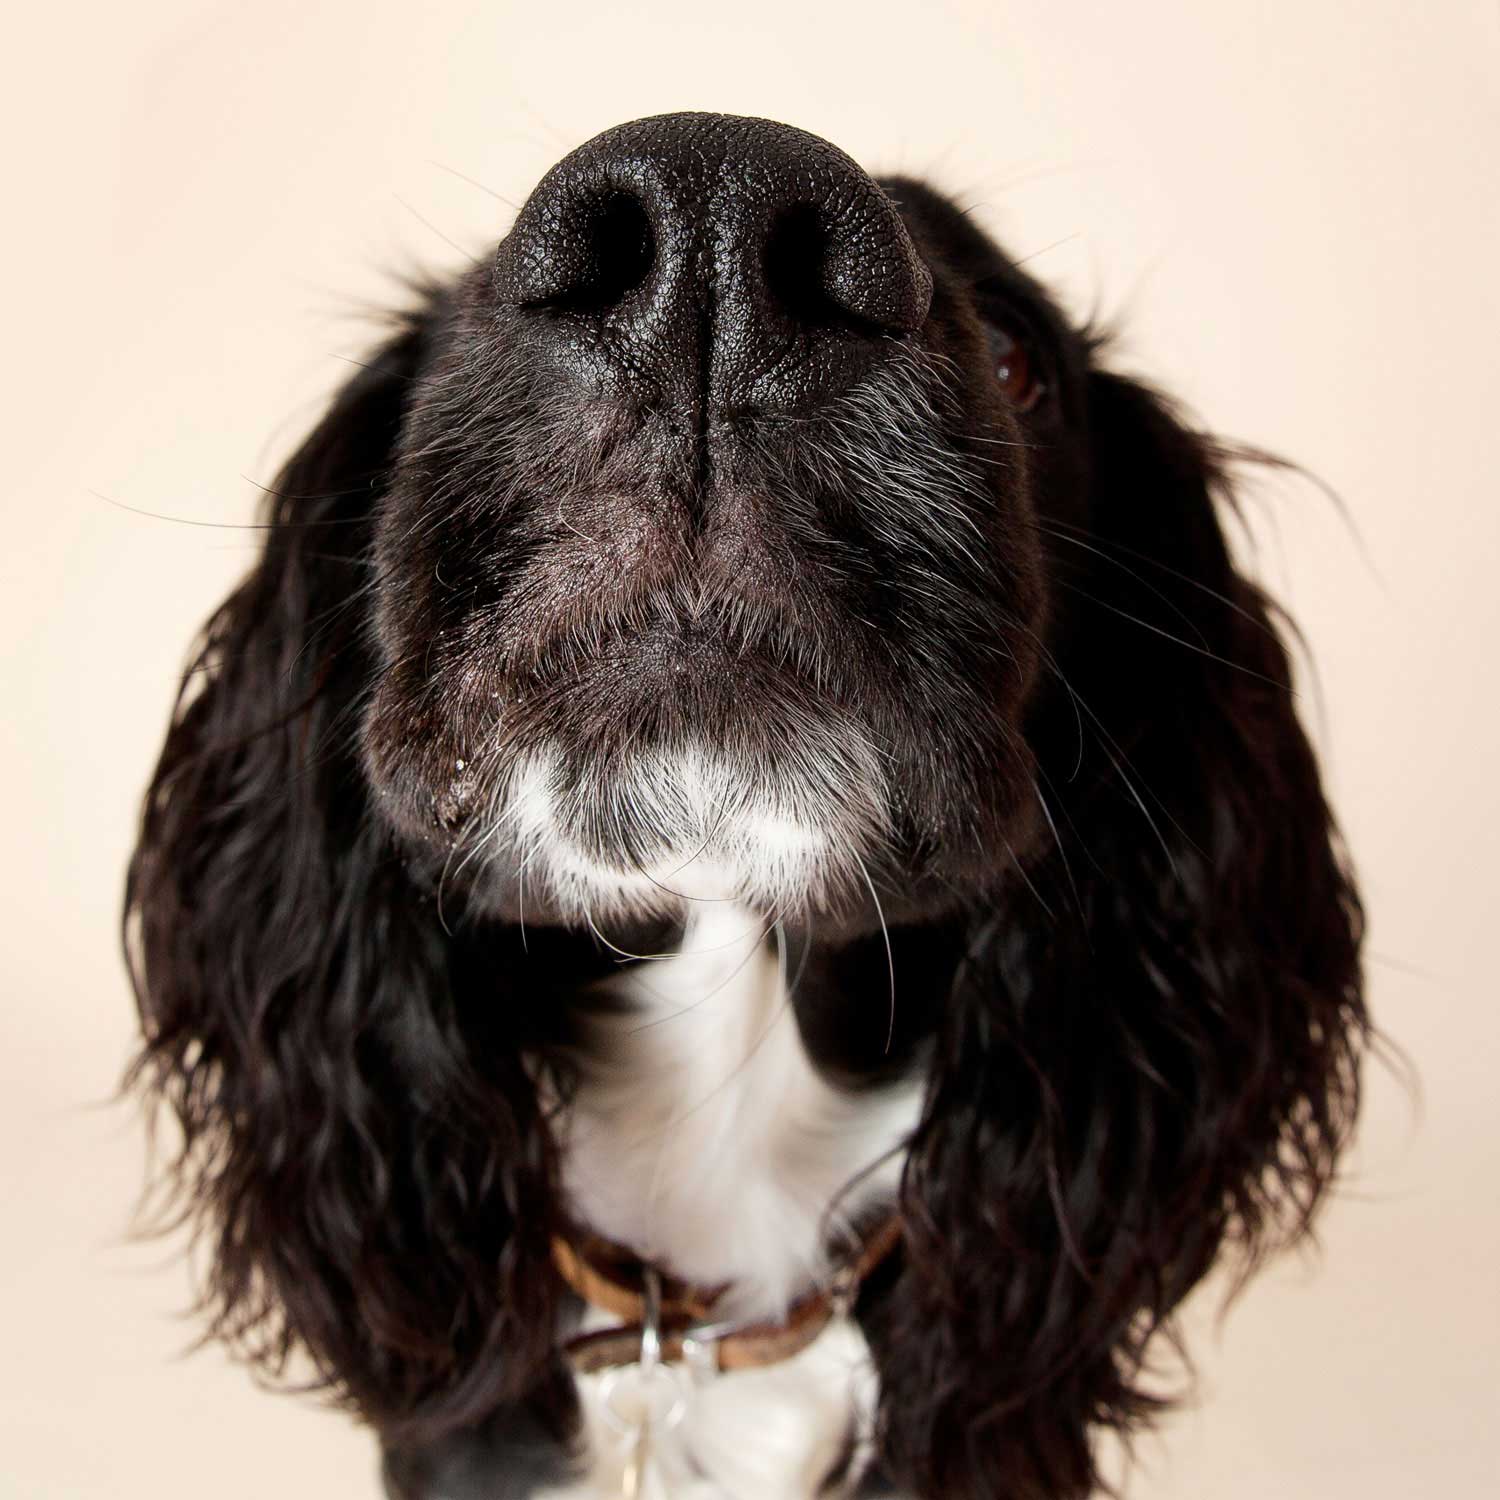 Dog Portrait Studio Photography 0015